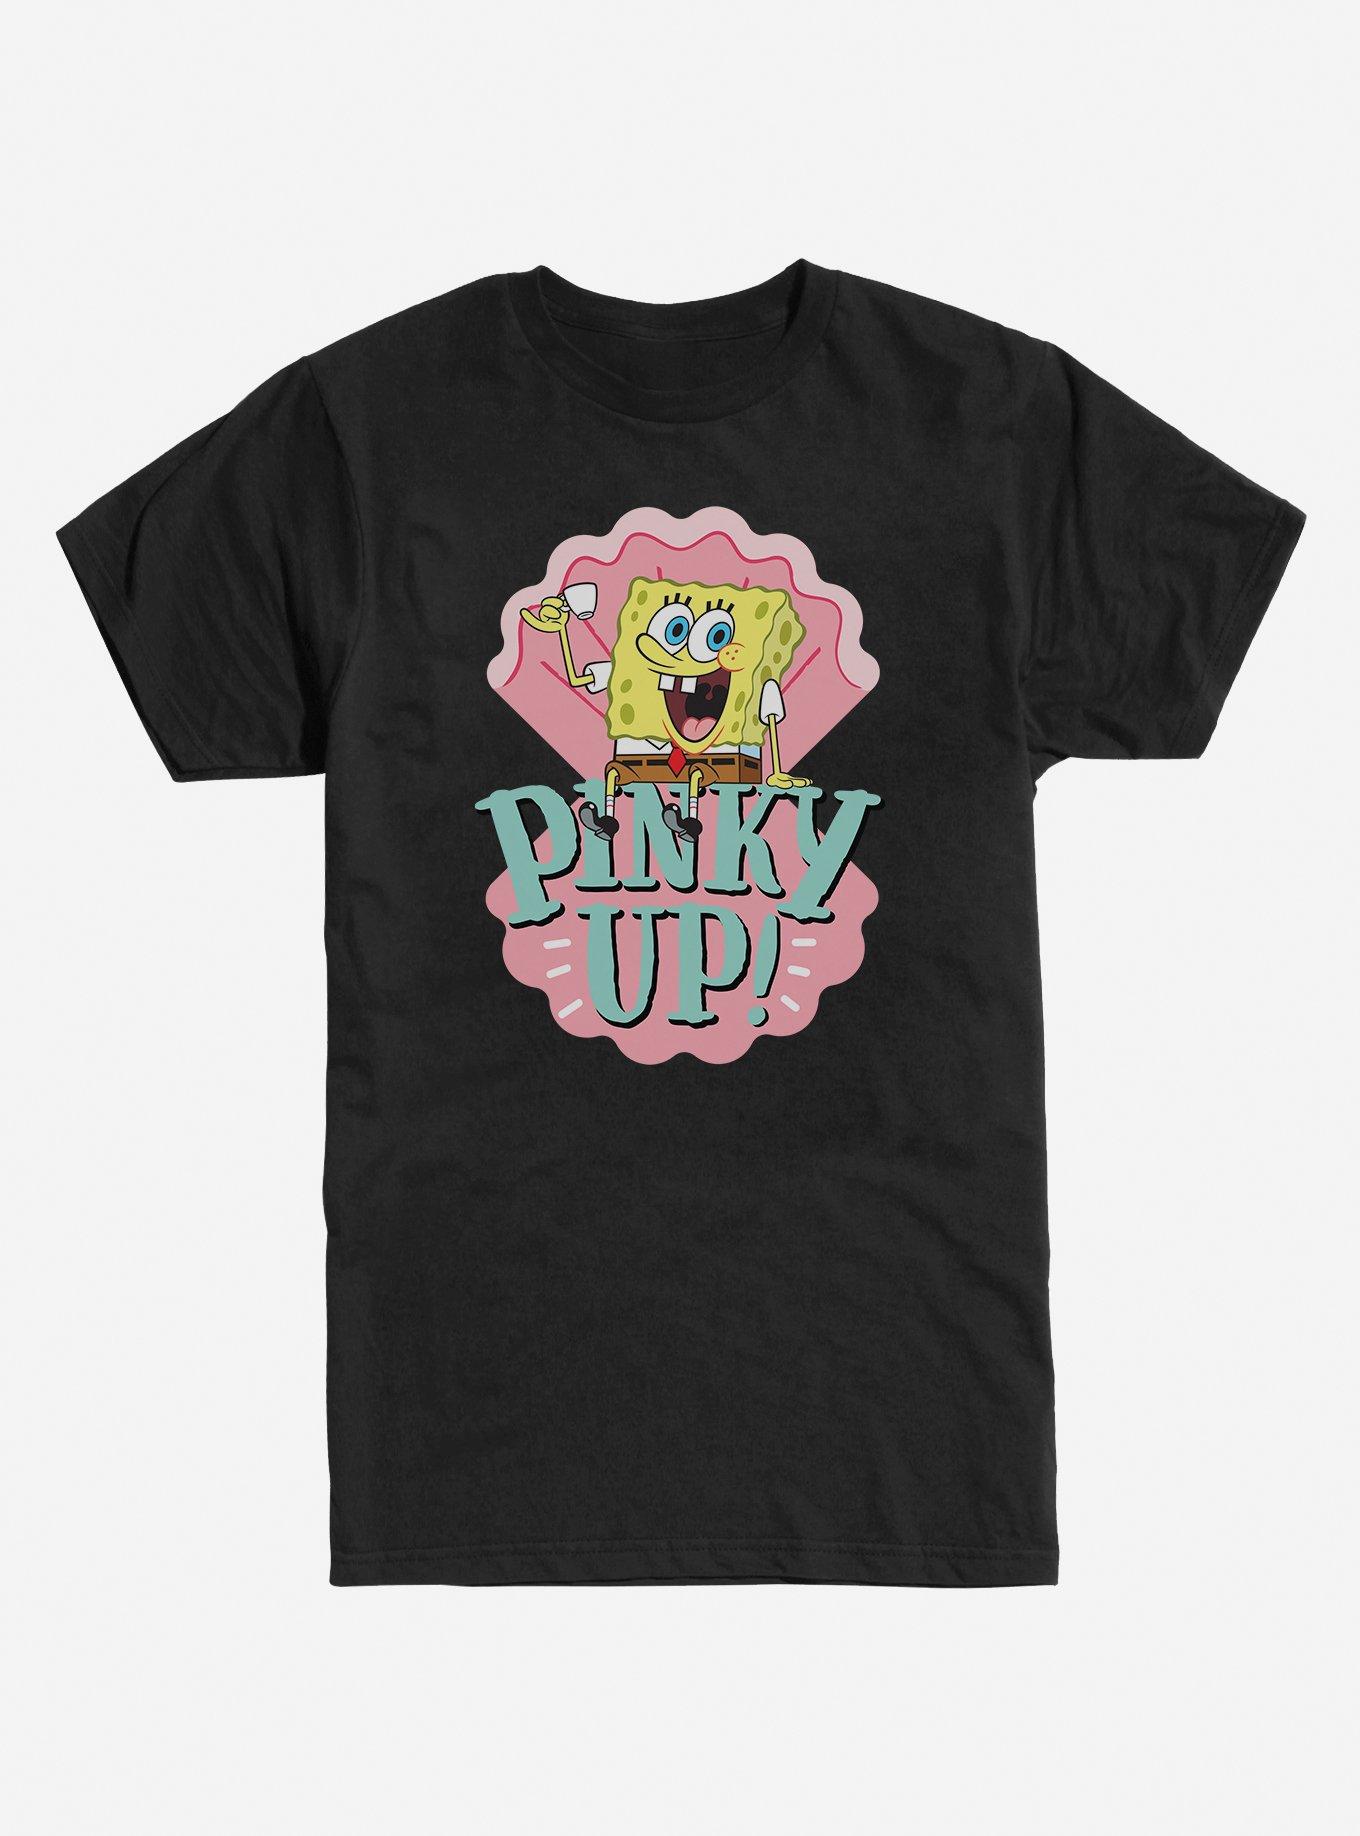 Spongebob Squarepants Pinky Up T-Shirt | Hot Topic